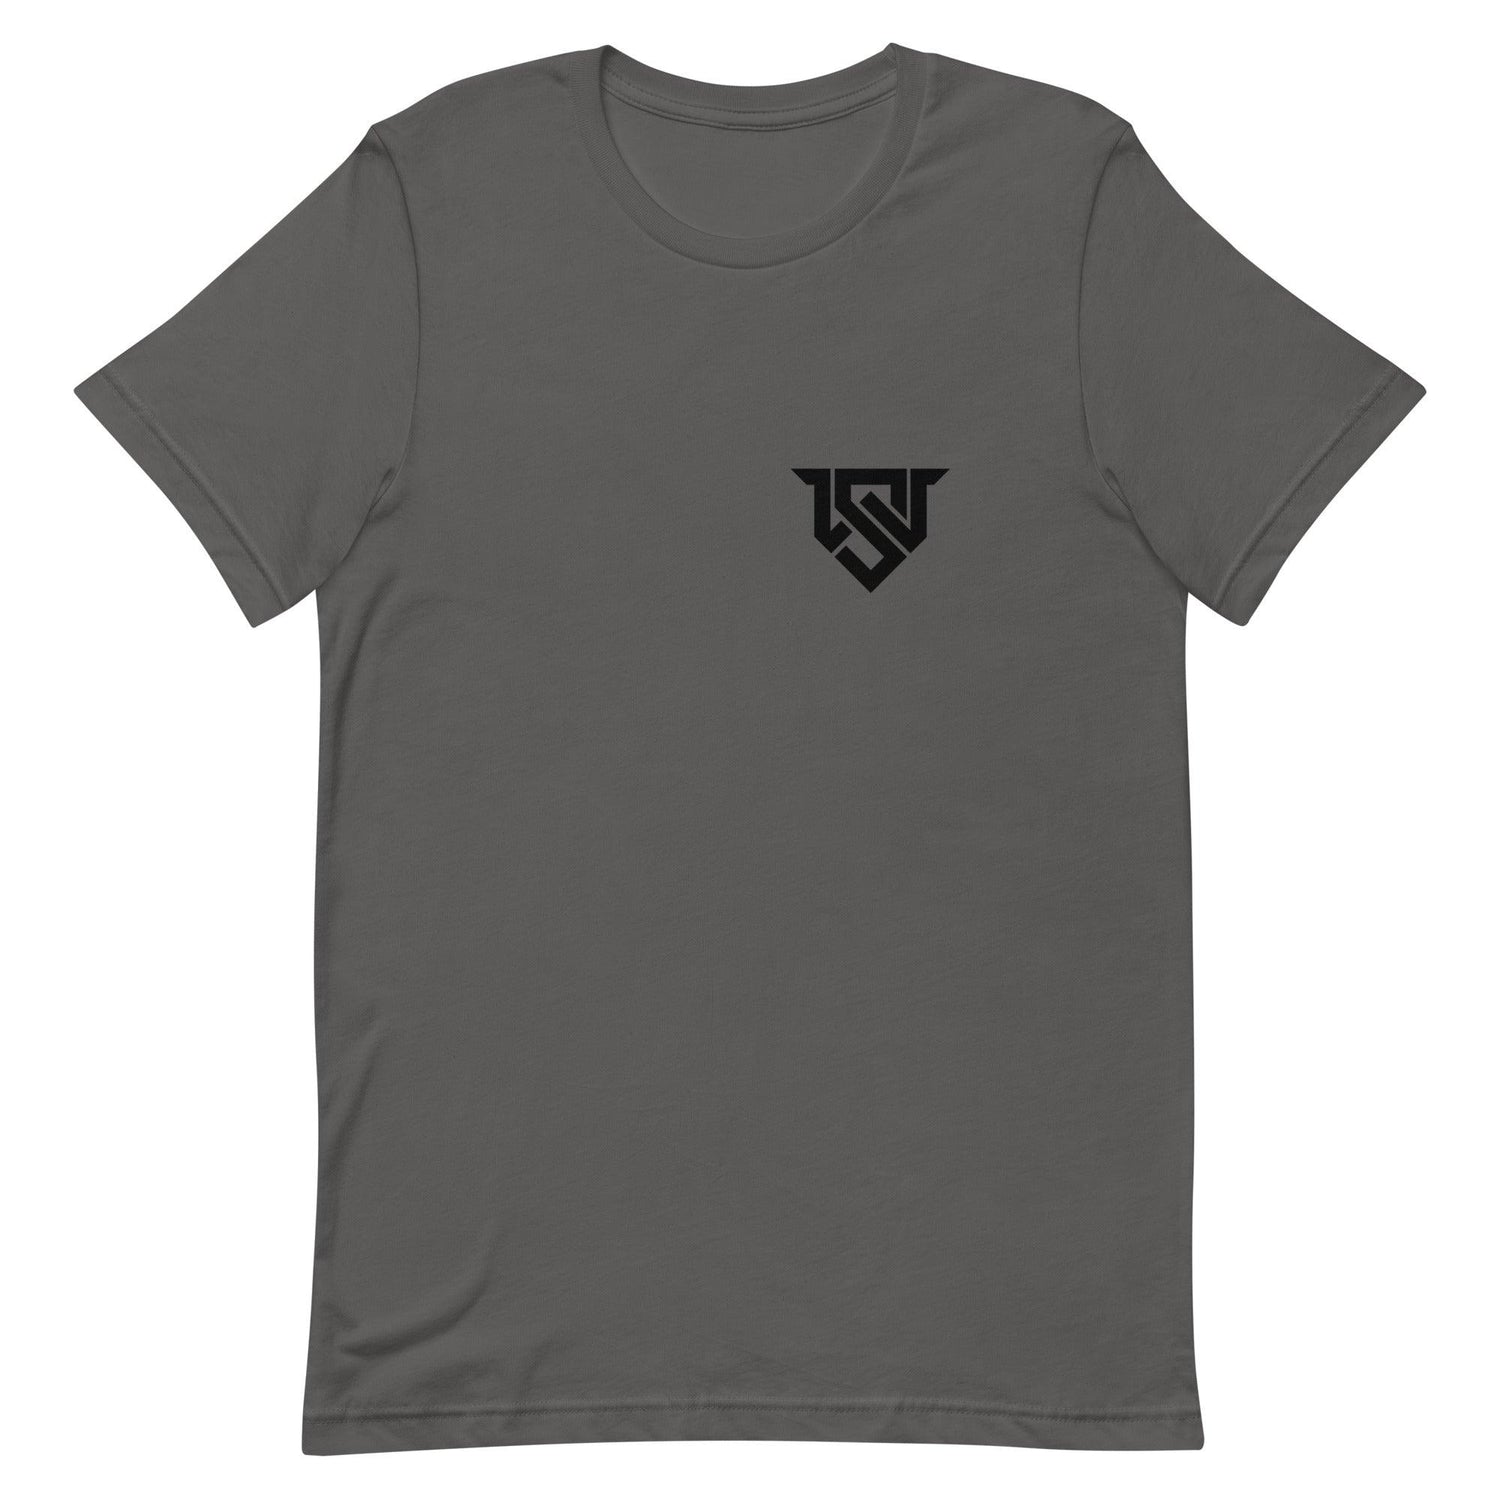 Sam Webb "Elite" t-shirt - Fan Arch